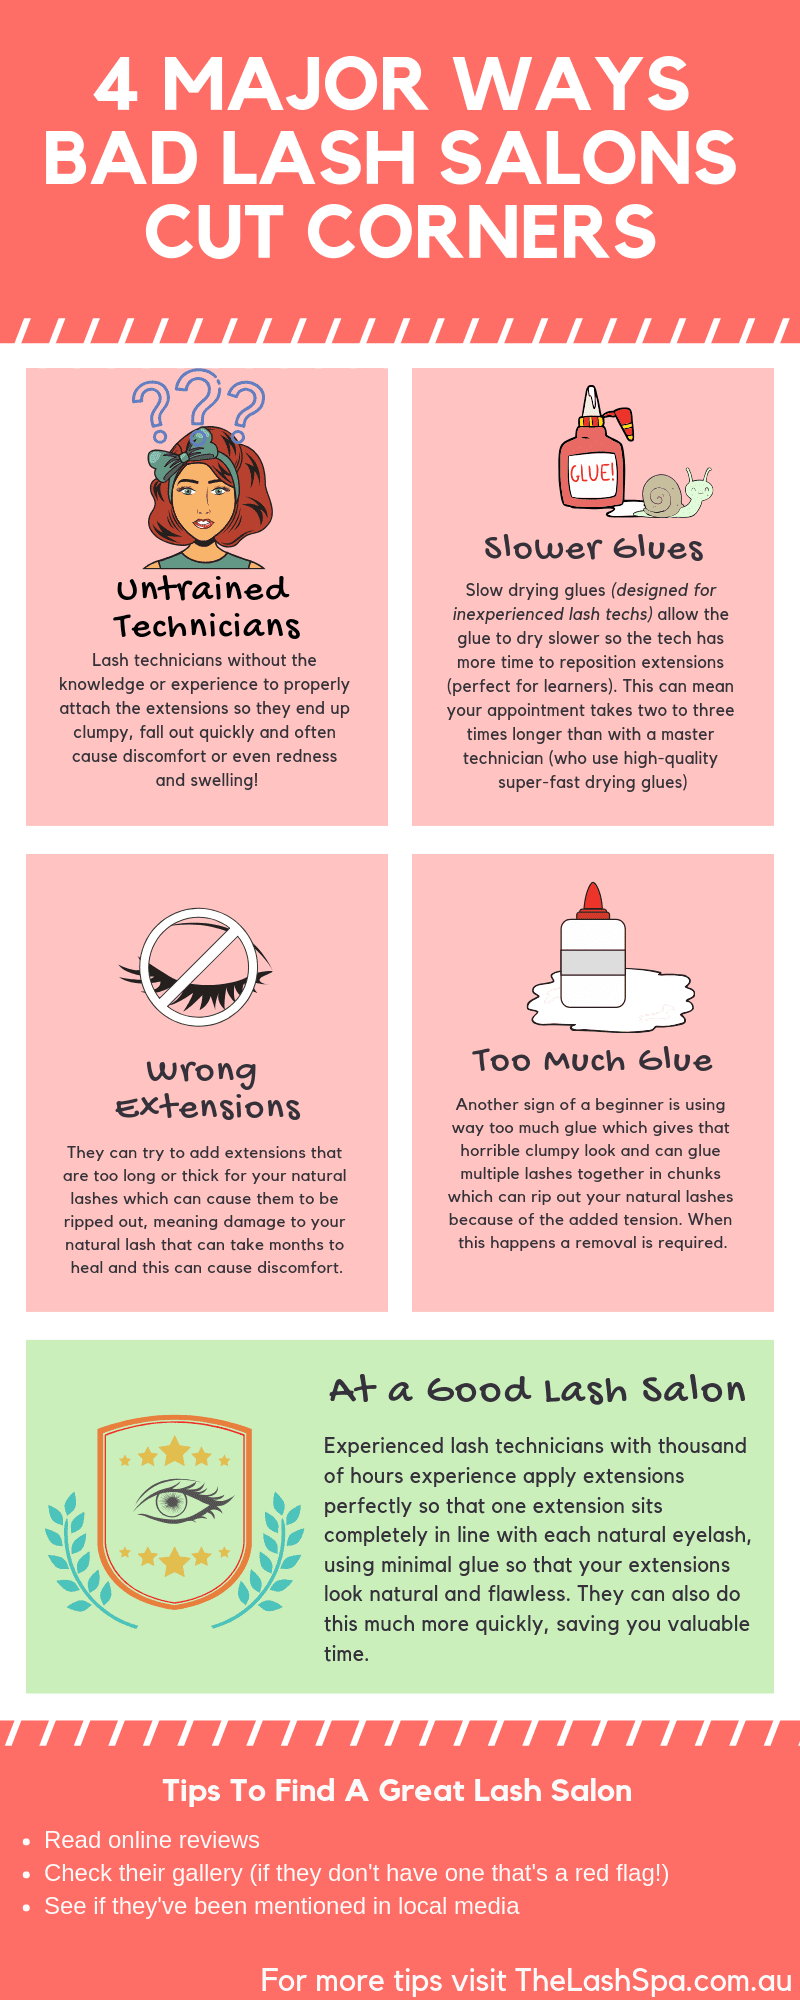 4 Major Ways Bad Lash Salons Cut Corners